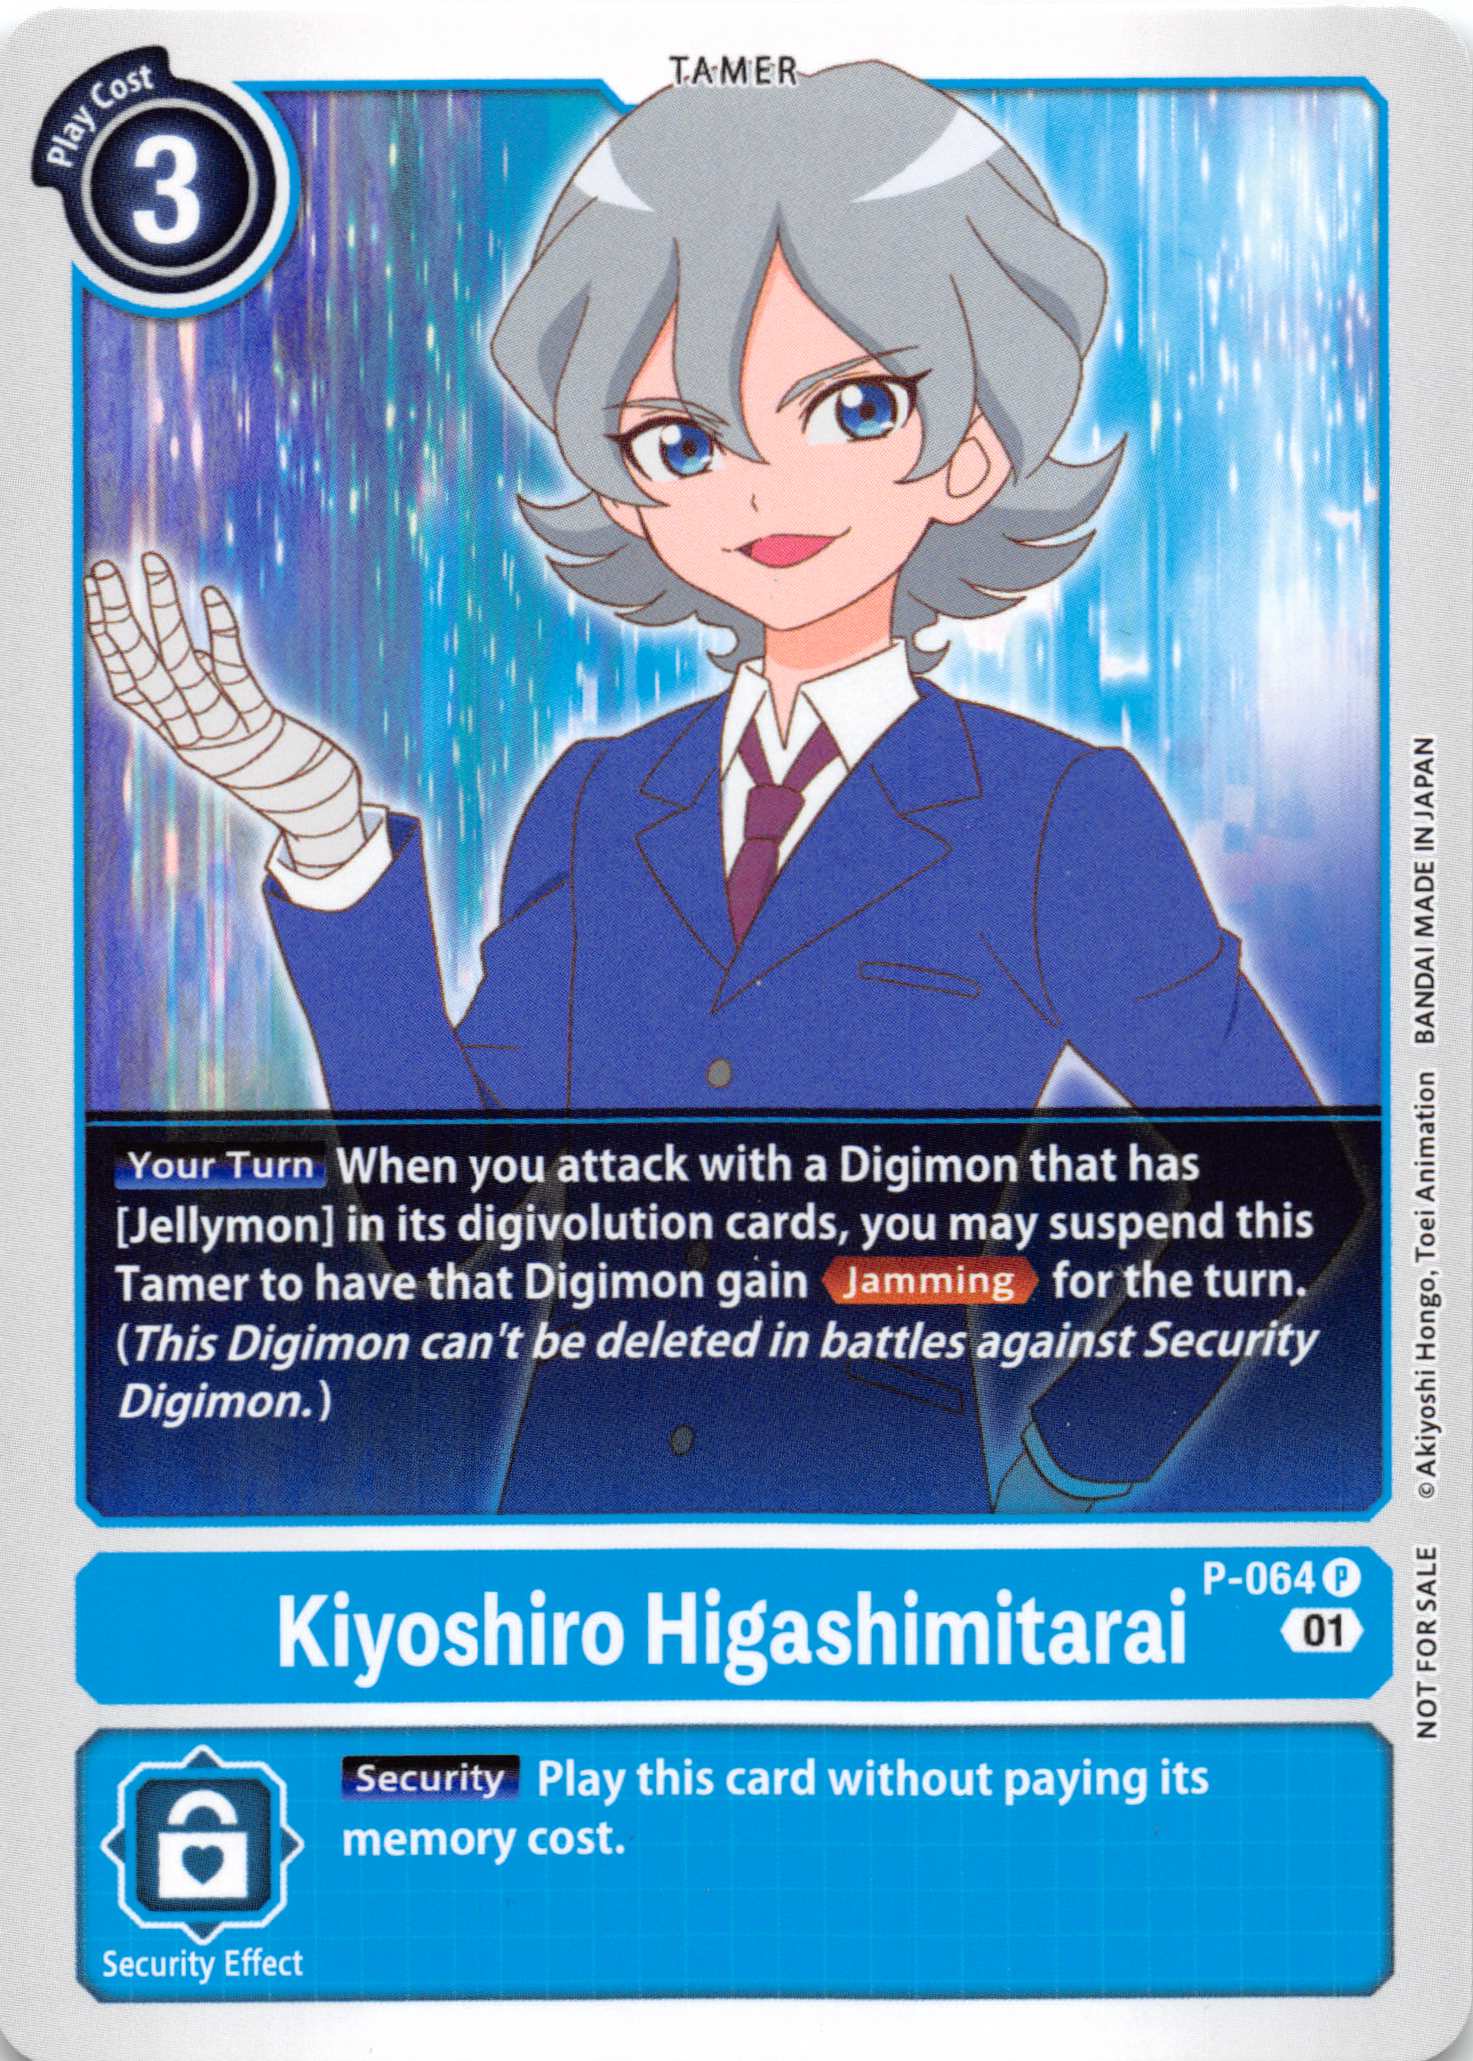 Kiyoshiro Higashimitarai (Official Tournament Pack Vol.5) [P-064] [Digimon Promotion Cards] Normal